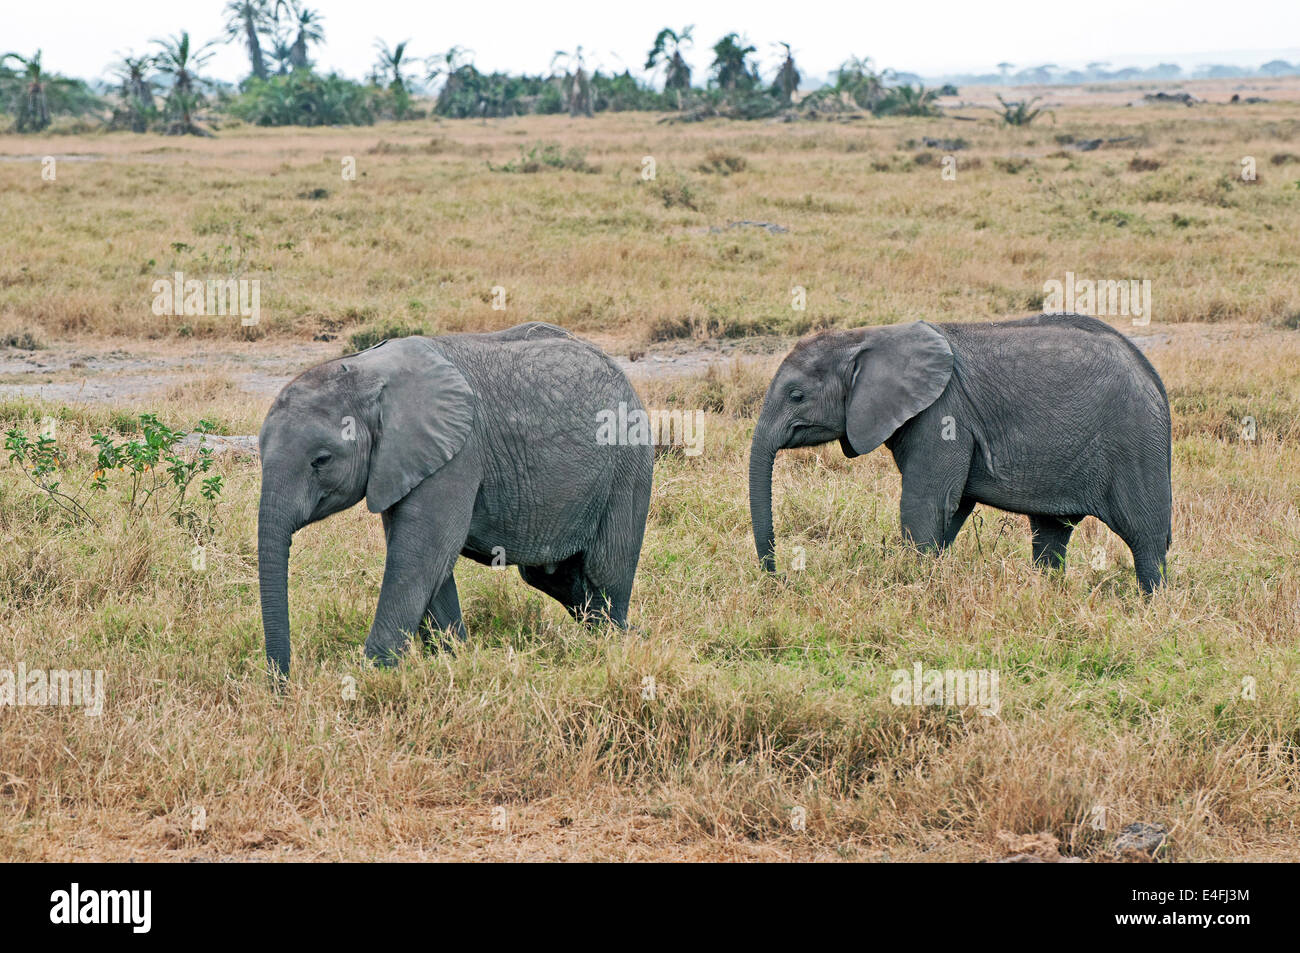 Two young baby elephants part of family group Amboseli National Park Kenya East Africa  ELEPHANT BABY BABIES AMBOSELI KENYA Stock Photo